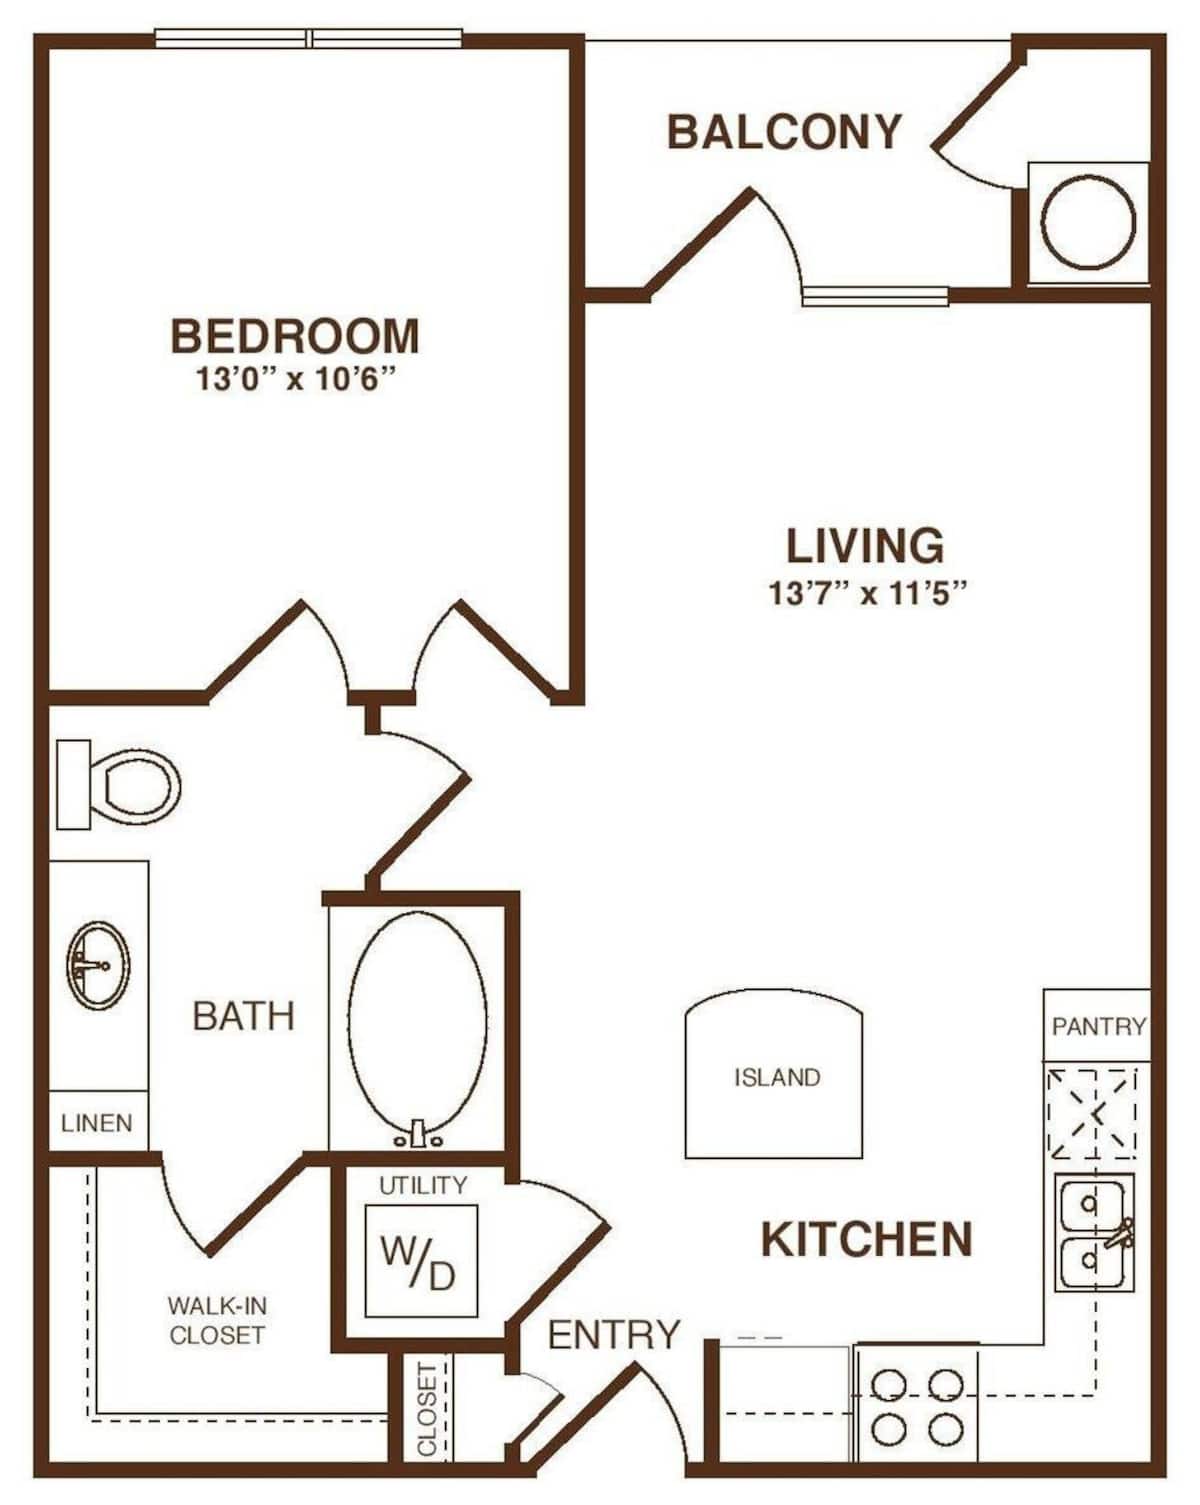 Floorplan diagram for The Remington, showing 1 bedroom